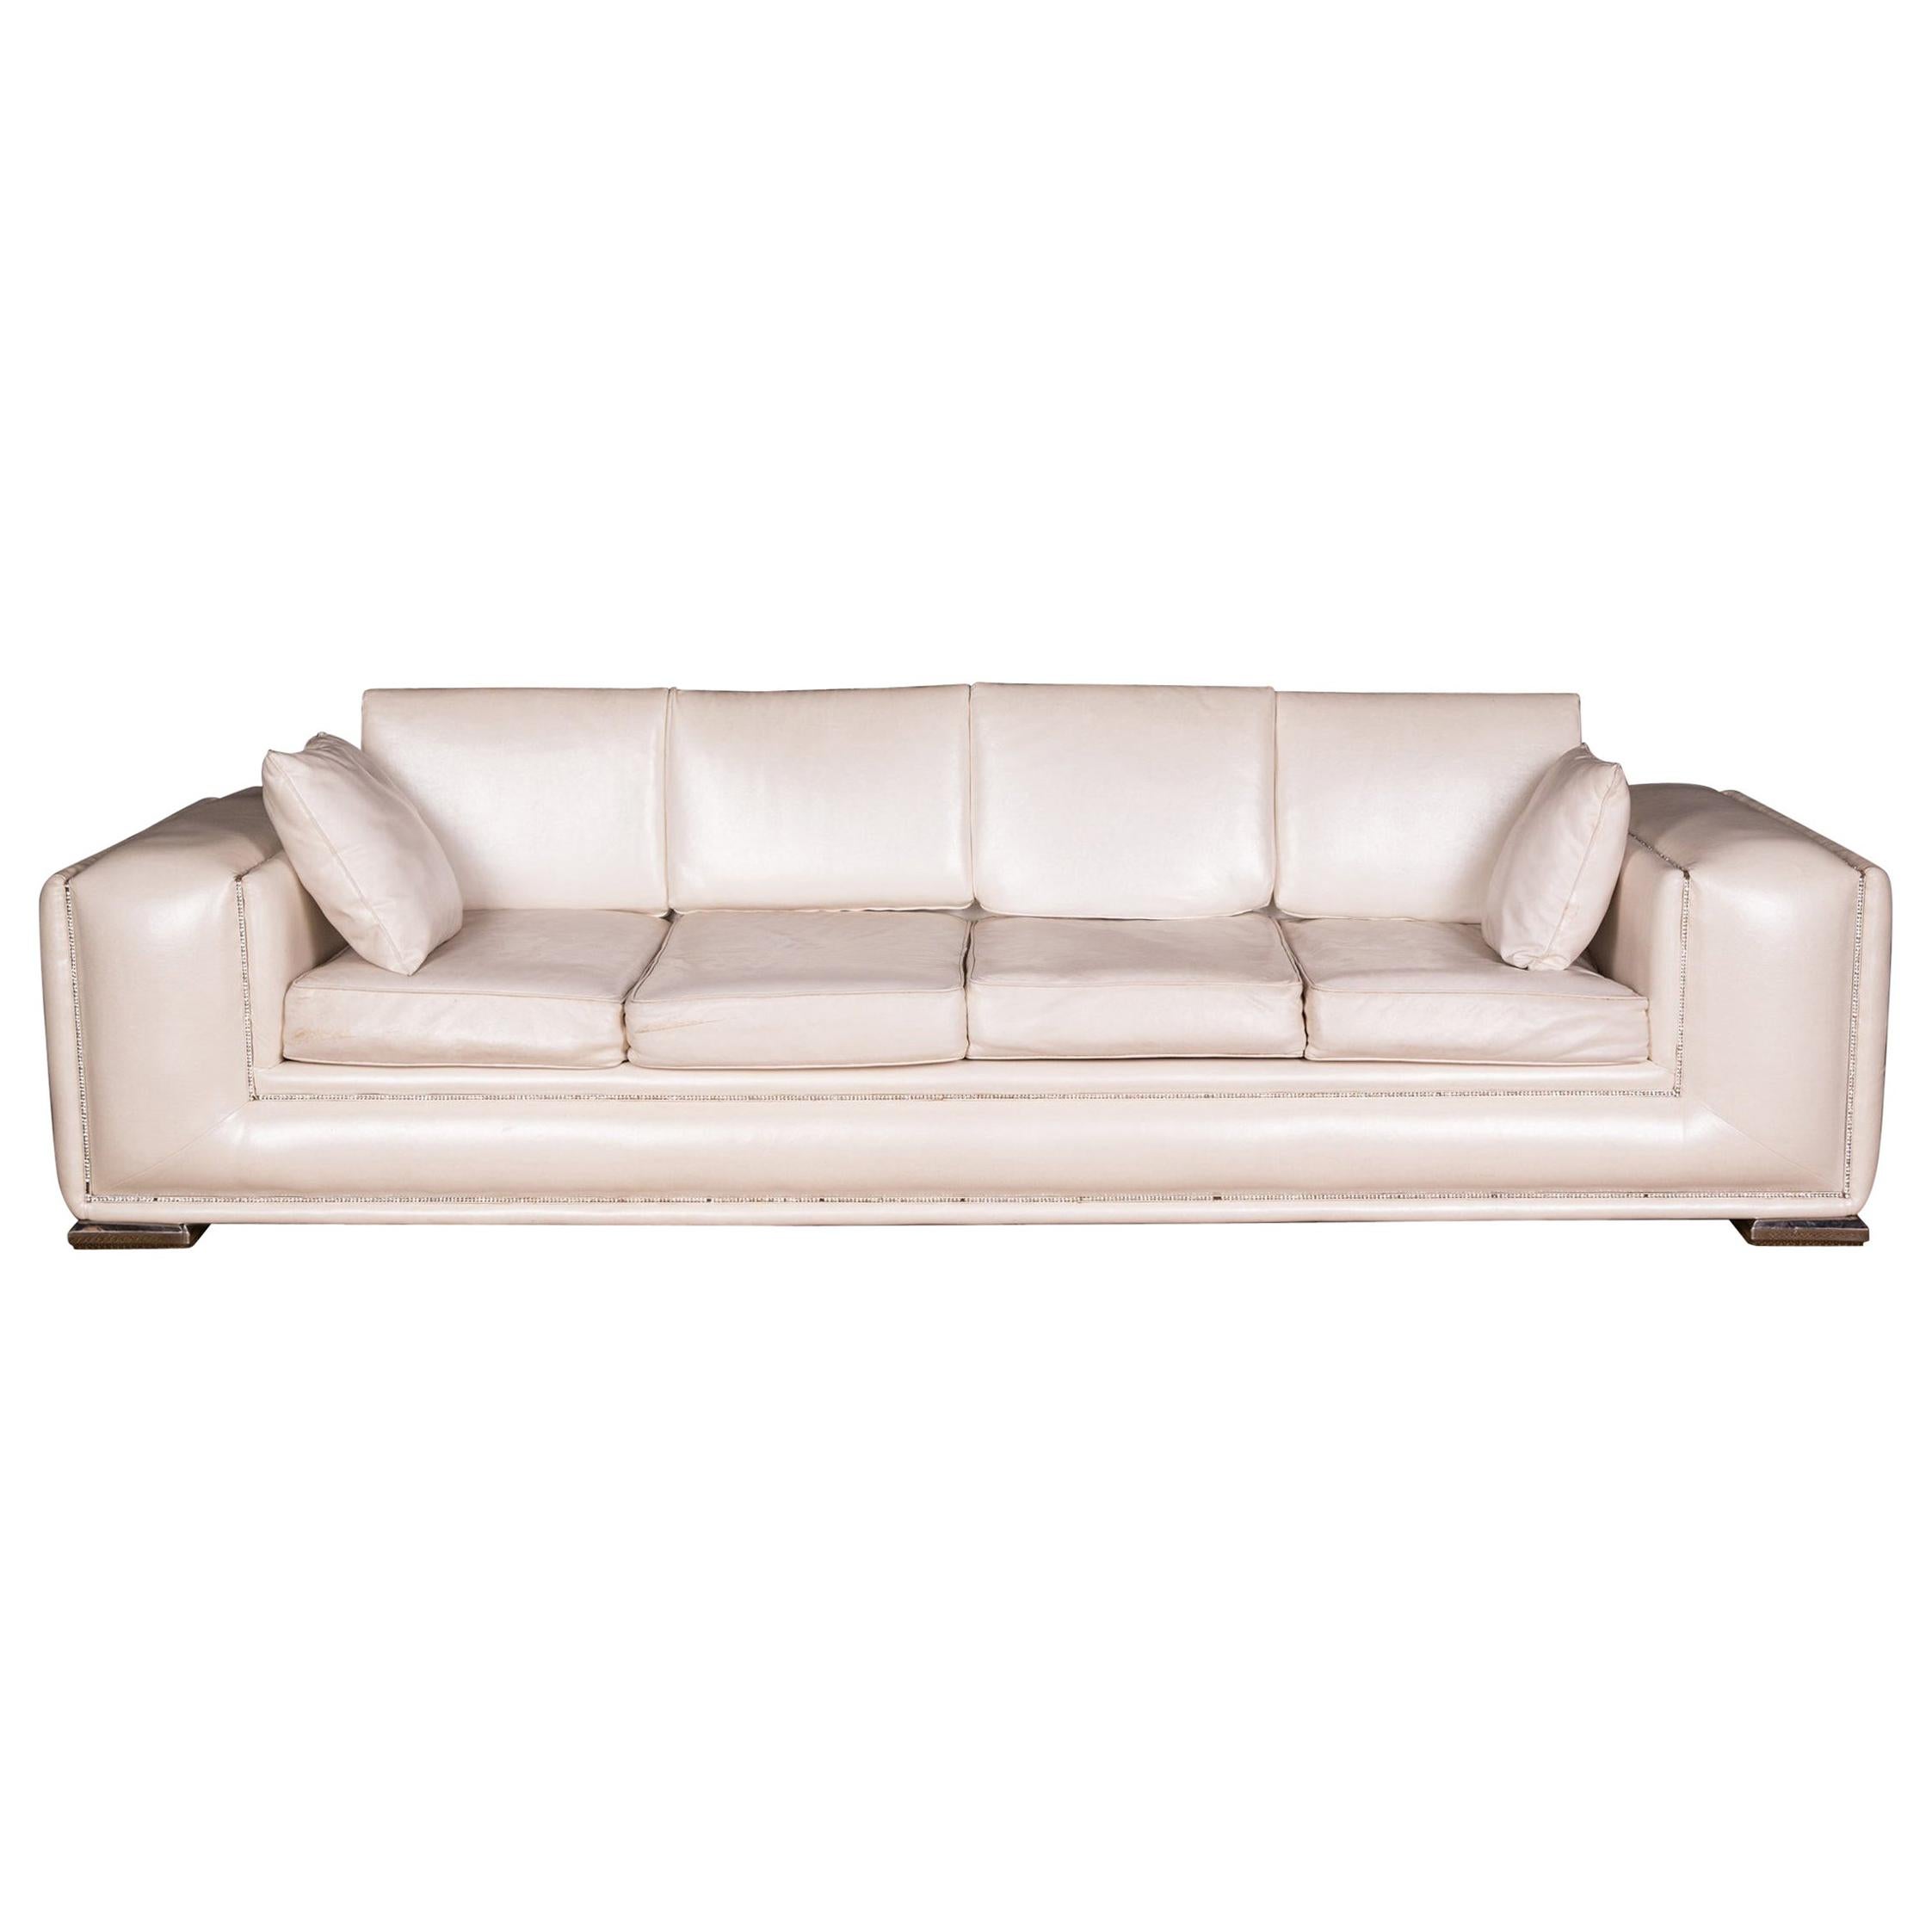 Designer Sofa Four-Seat with Swarovski Stones Rhinestones